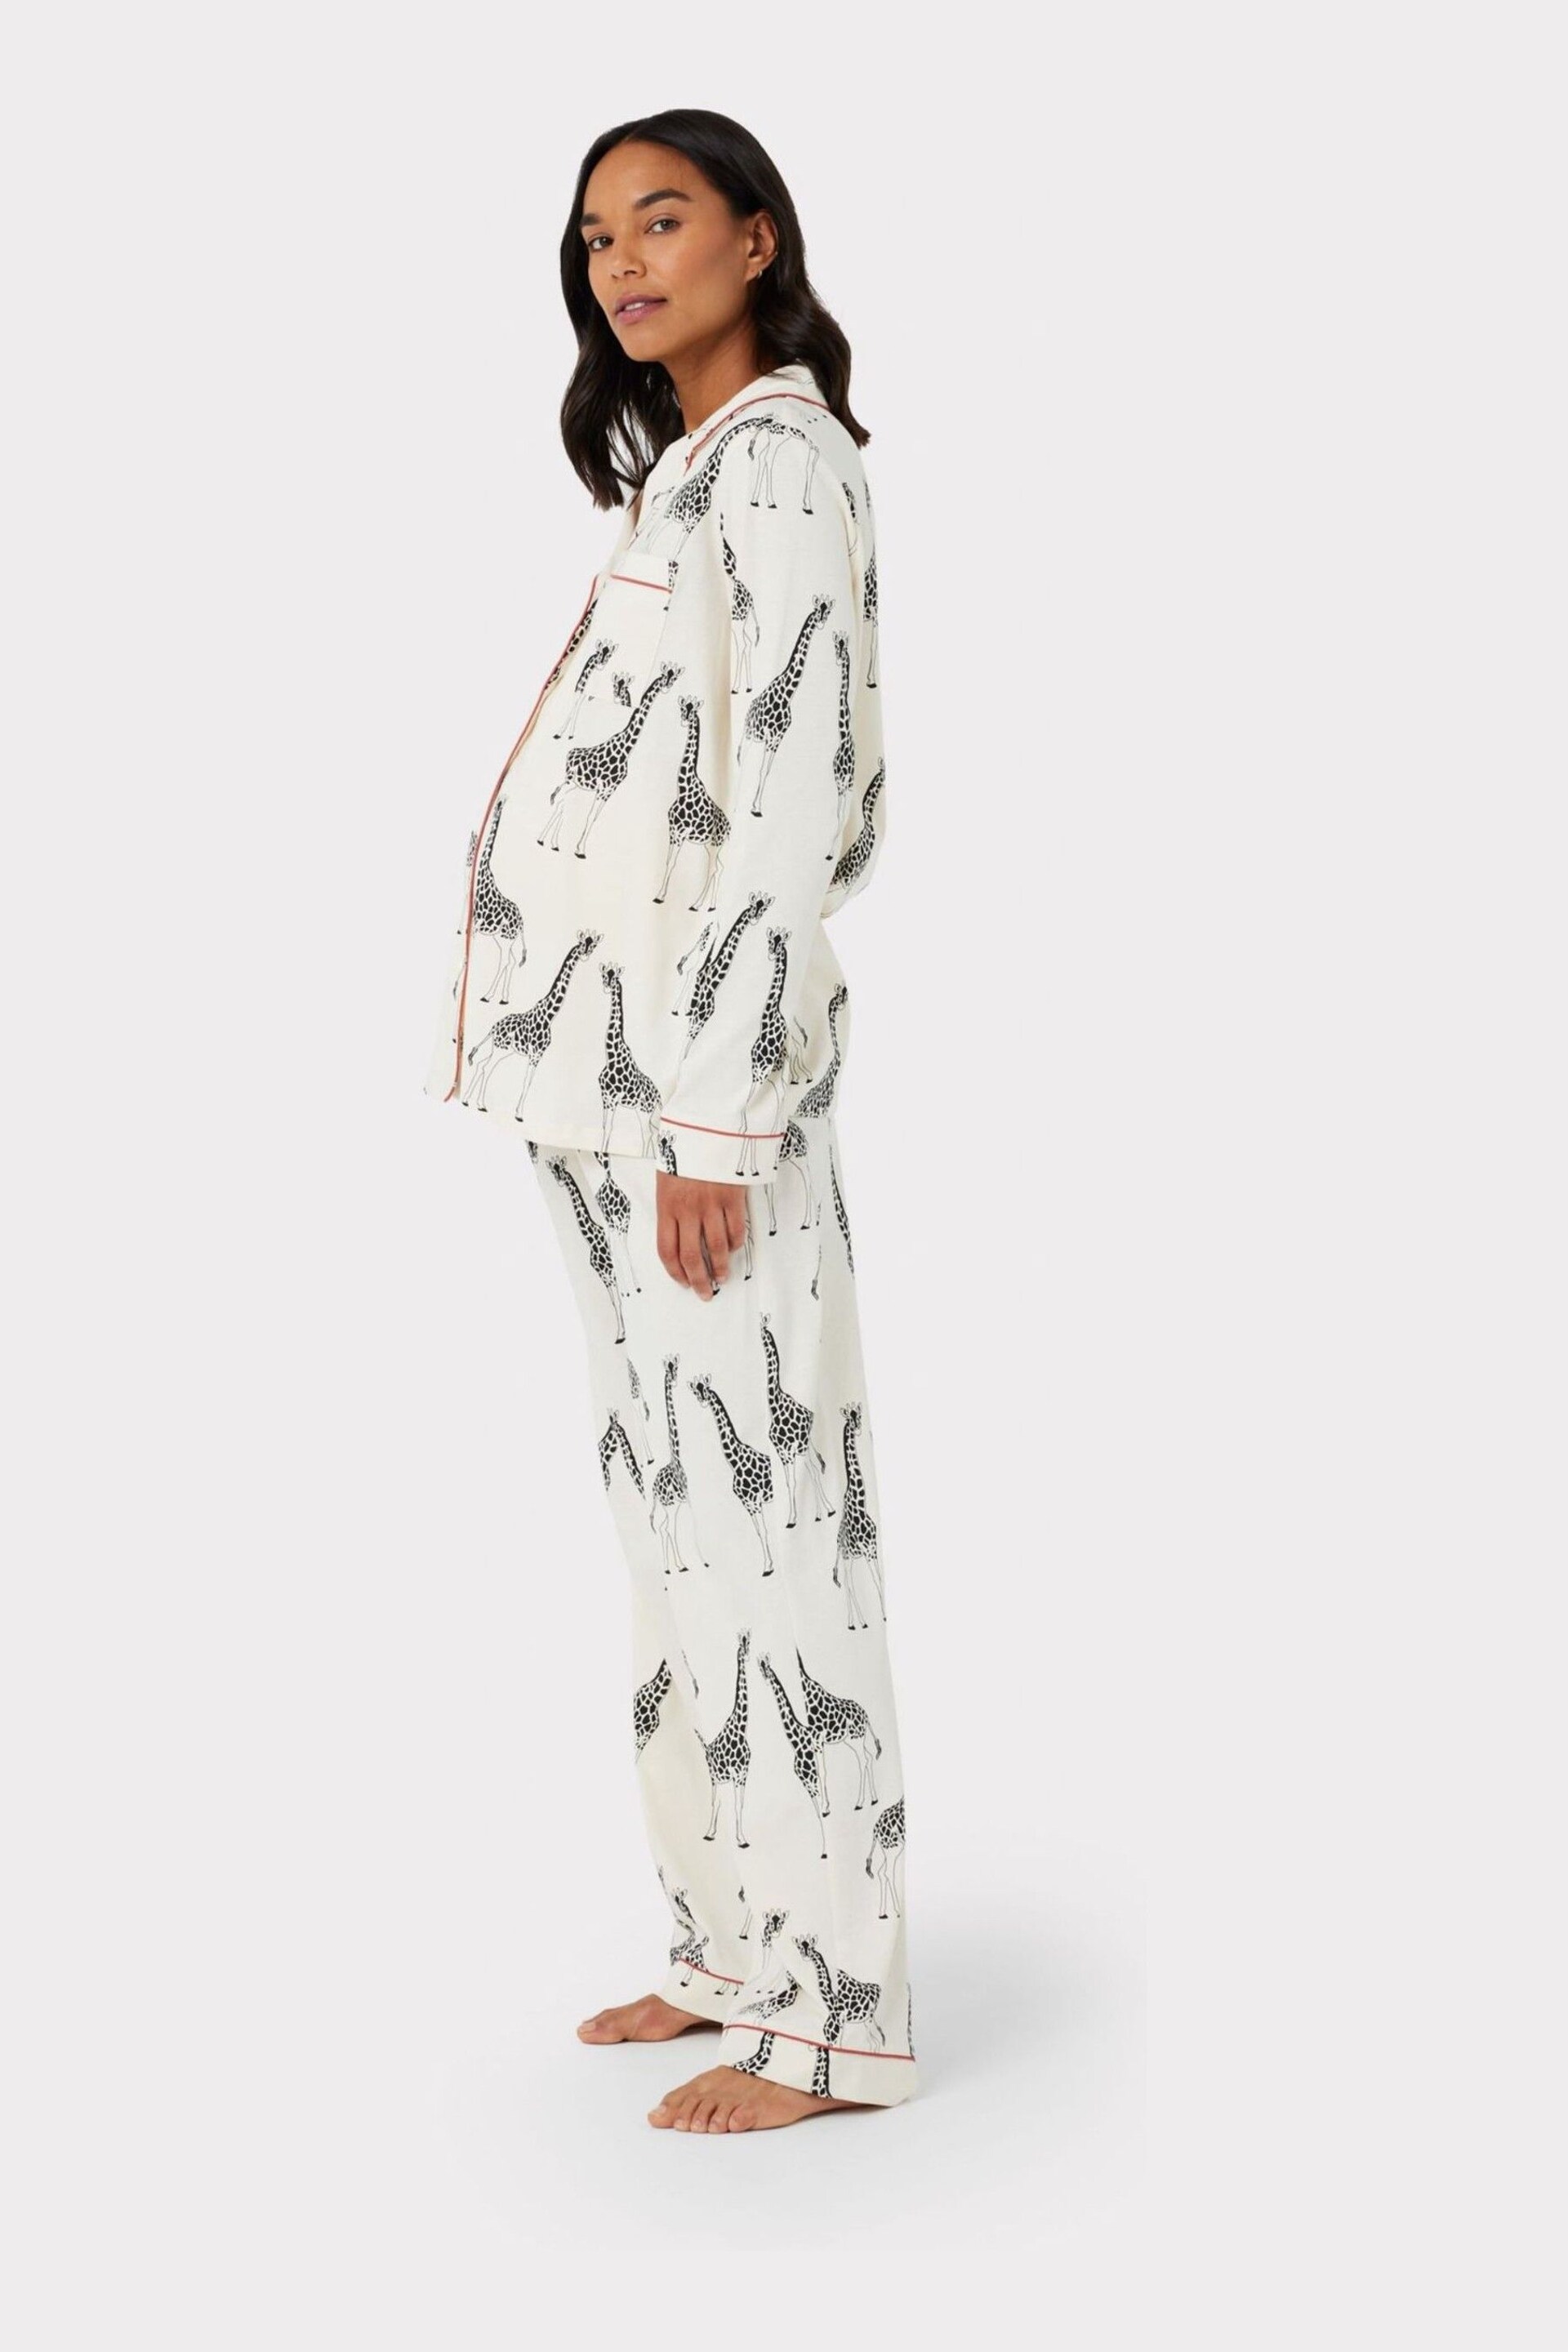 Chelsea Peers Cream Maternity Organic Cotton Giraffe Print Long Pyjama Set - Image 4 of 6